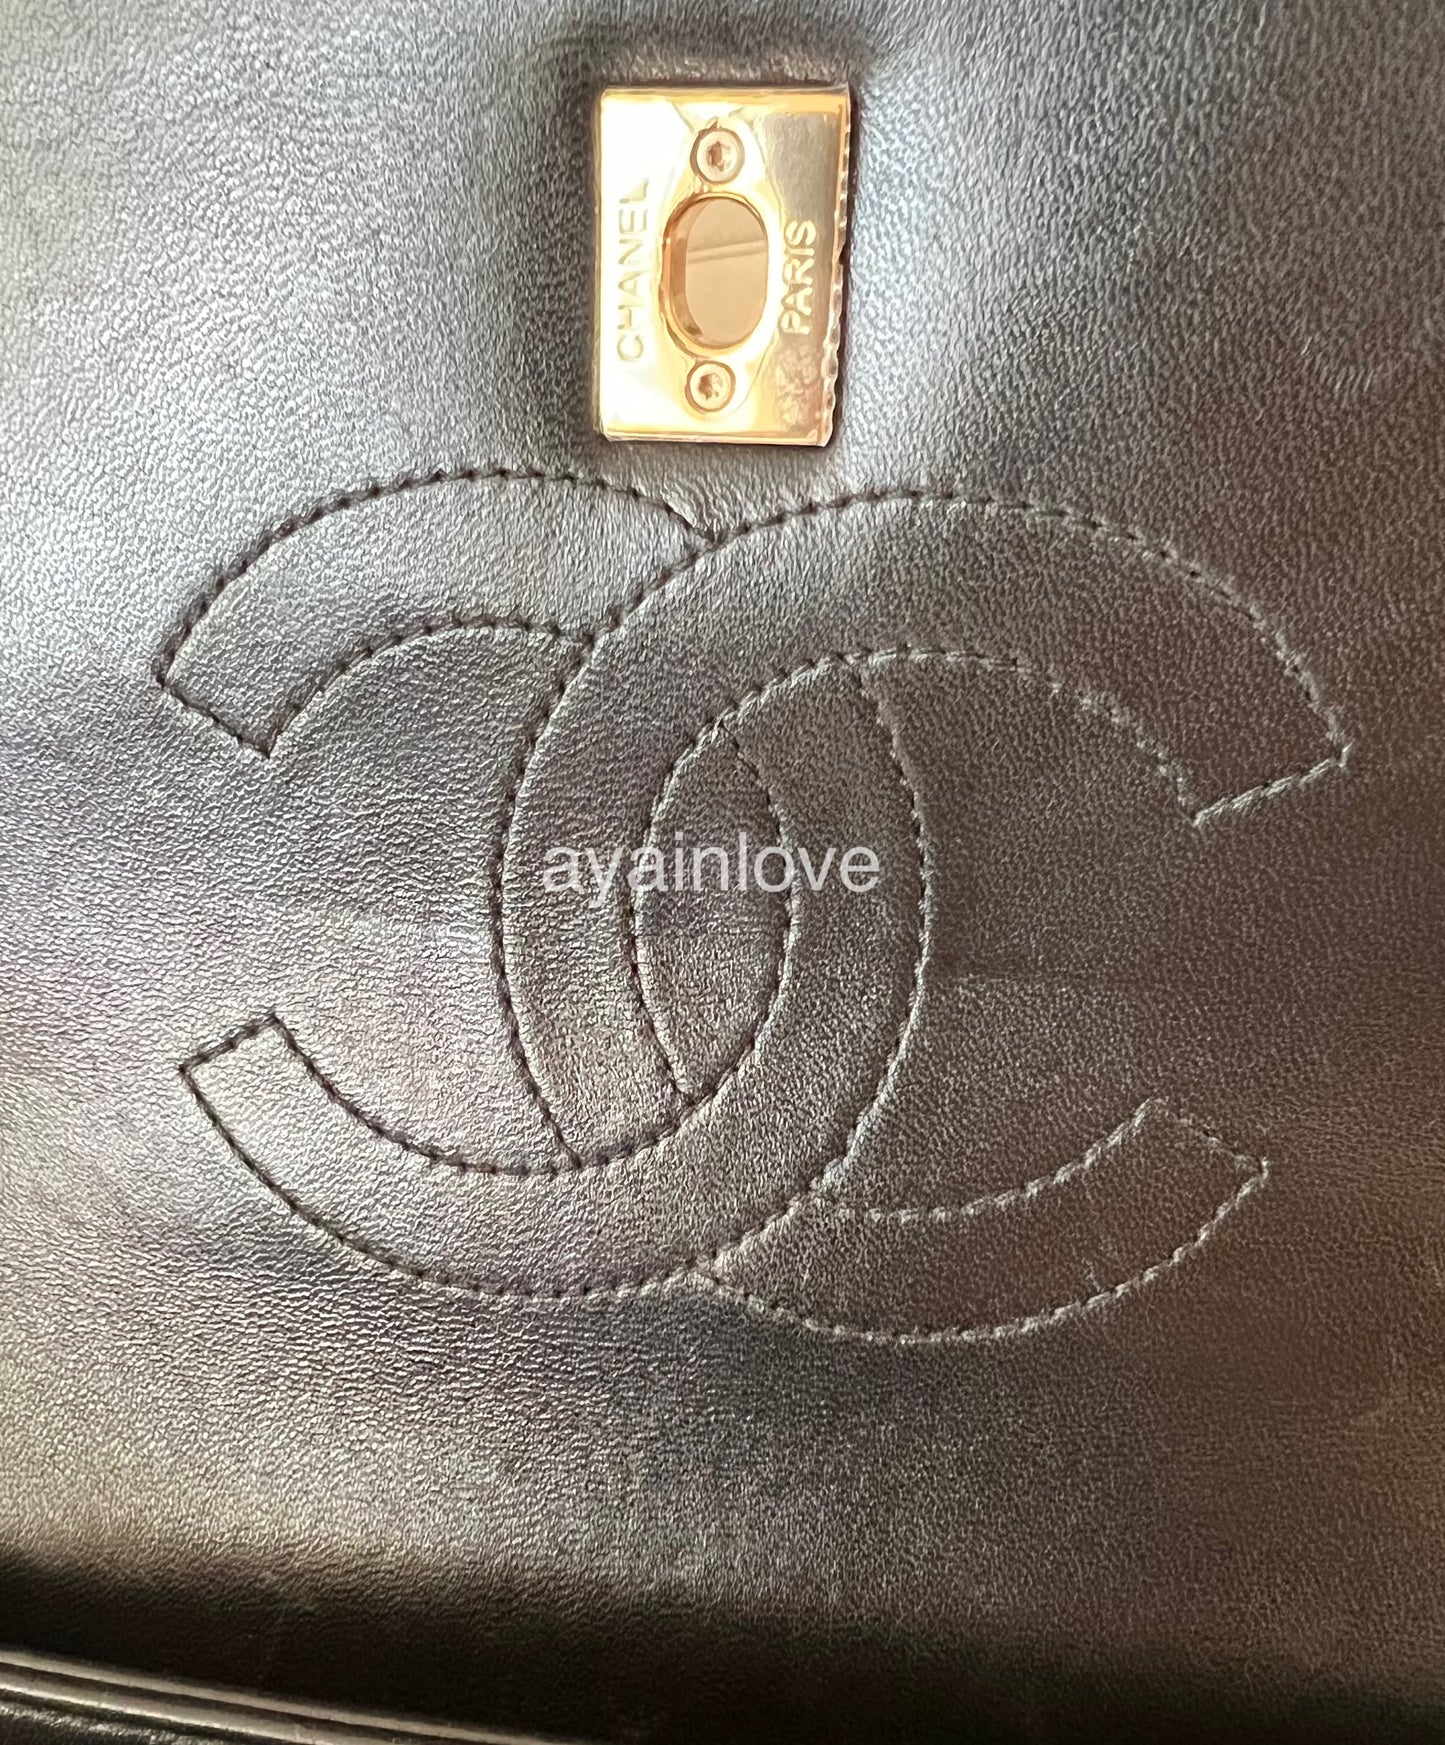 CHANEL Black Small Trendy Flap Bag Light Gold Hardware